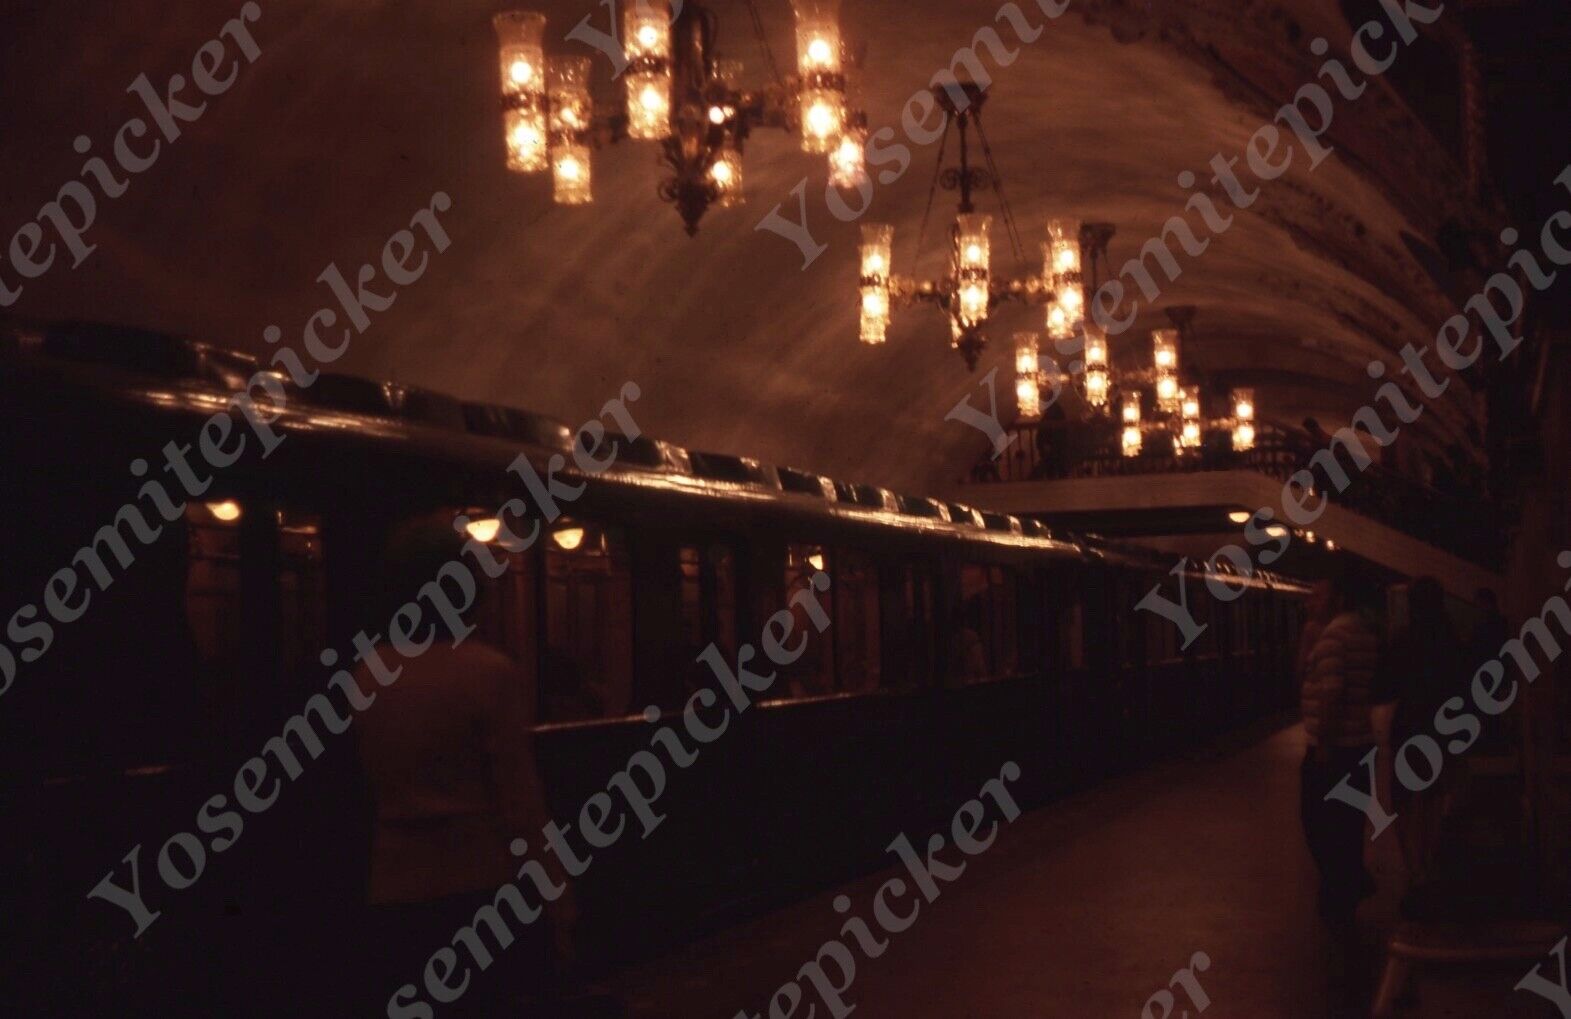 sl52 Original Slide  1979 Moscow Underground Railroad Station 989a